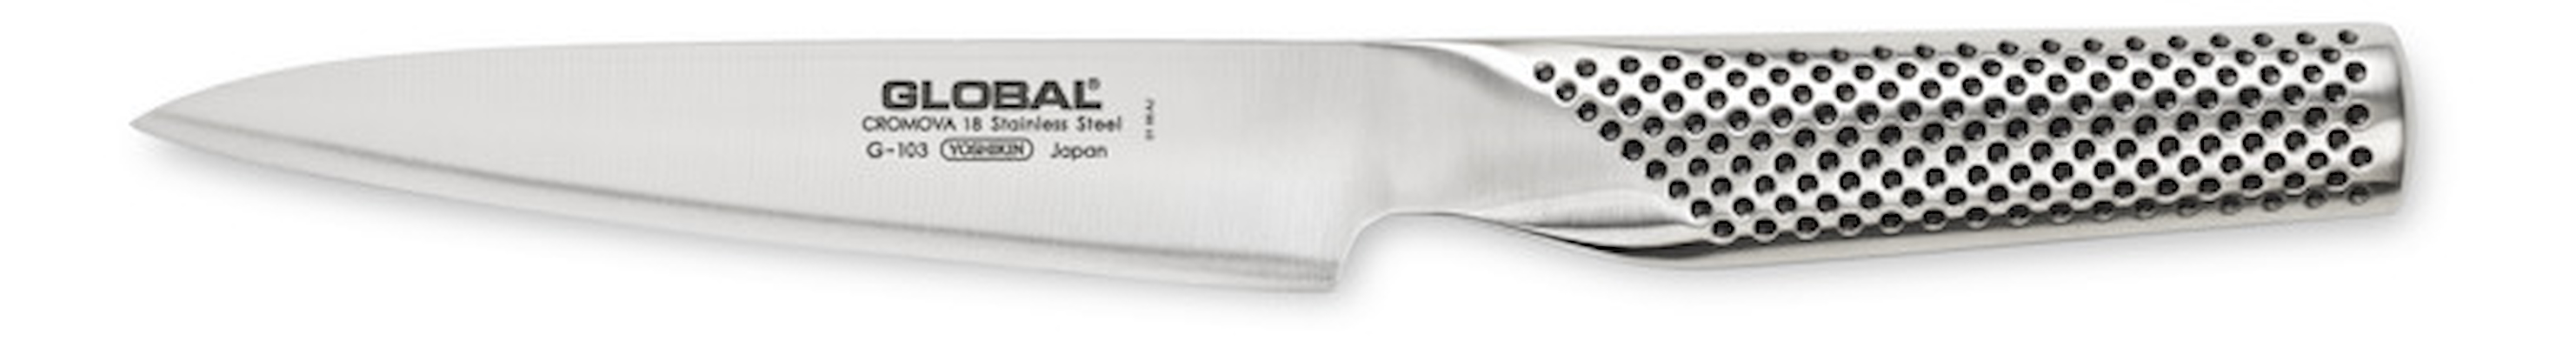 Global Universalkniv Stål 15 cm G-103